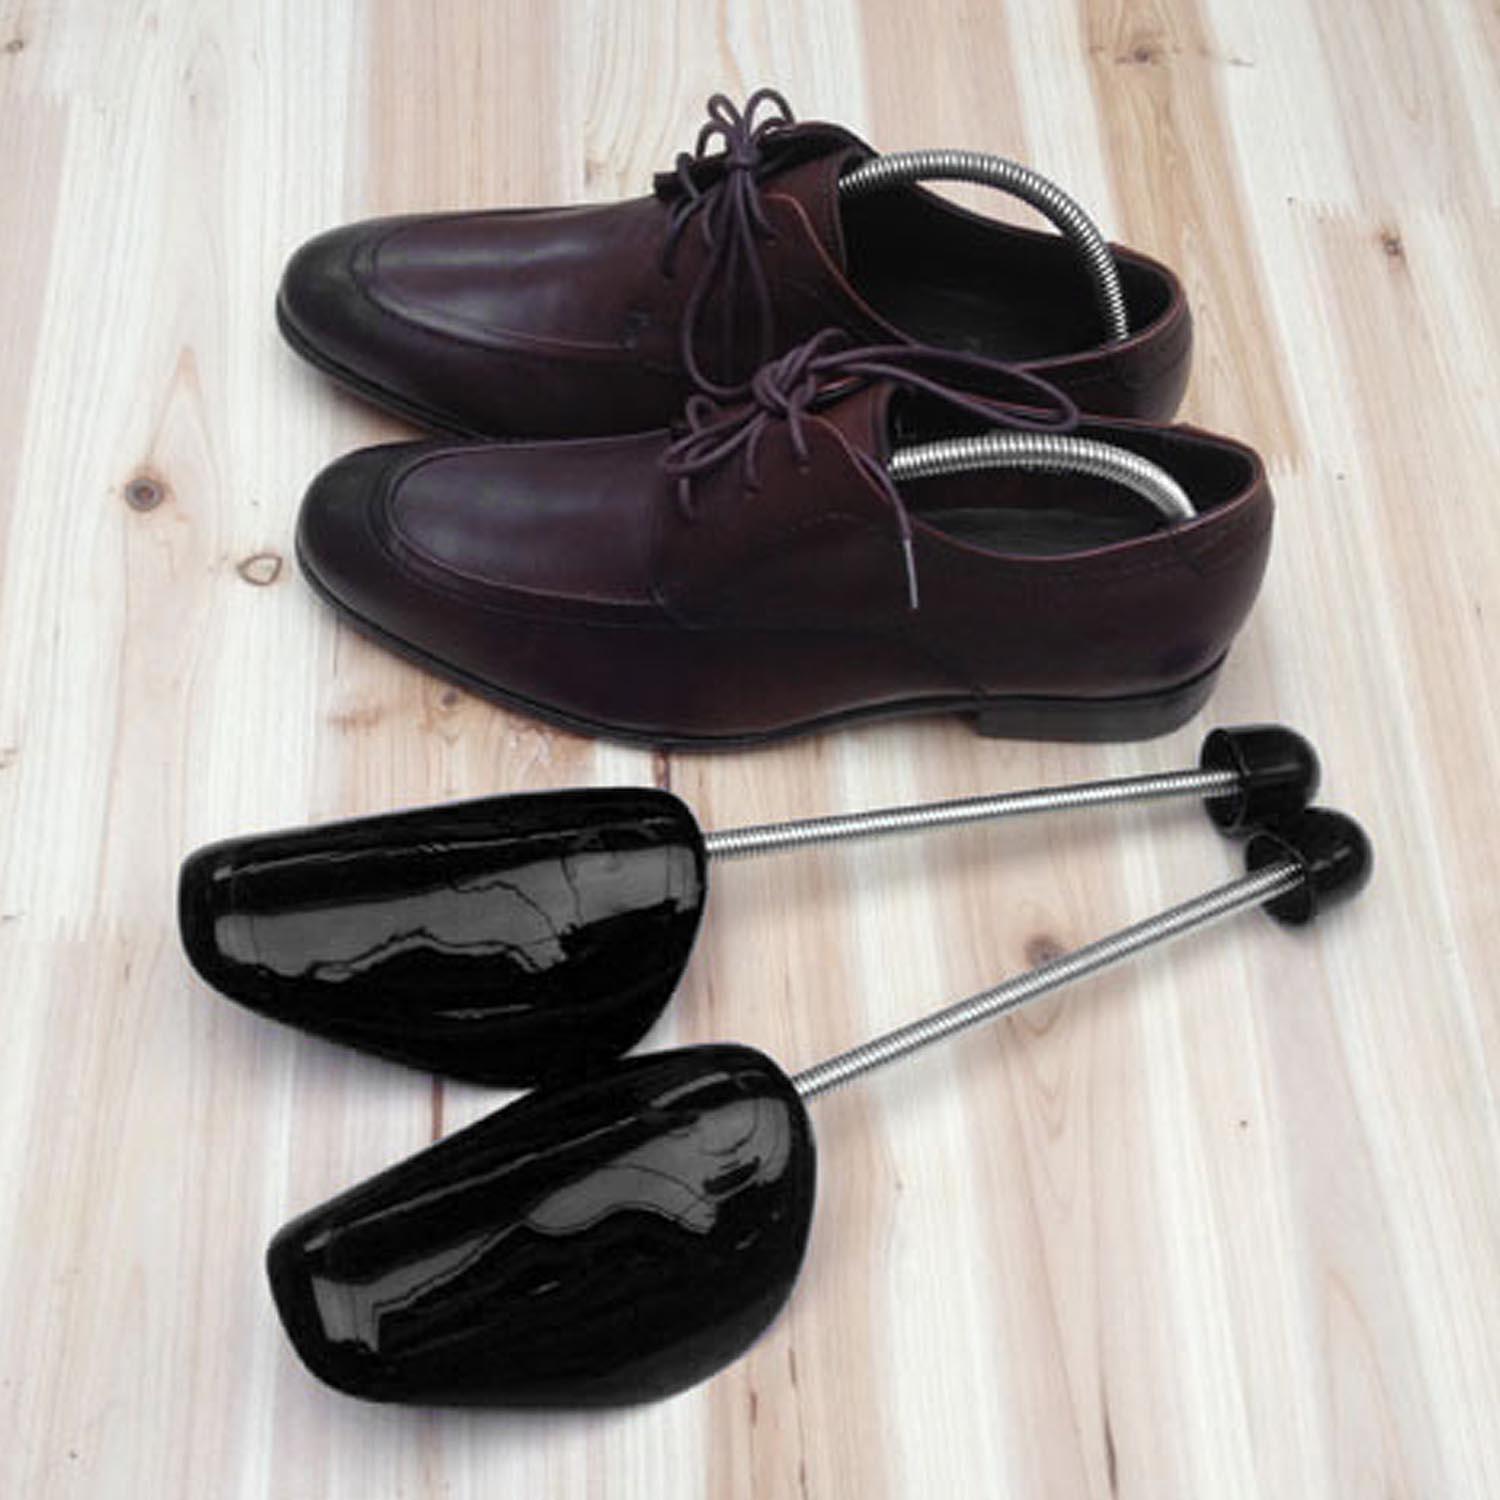 shoe tree shoes online